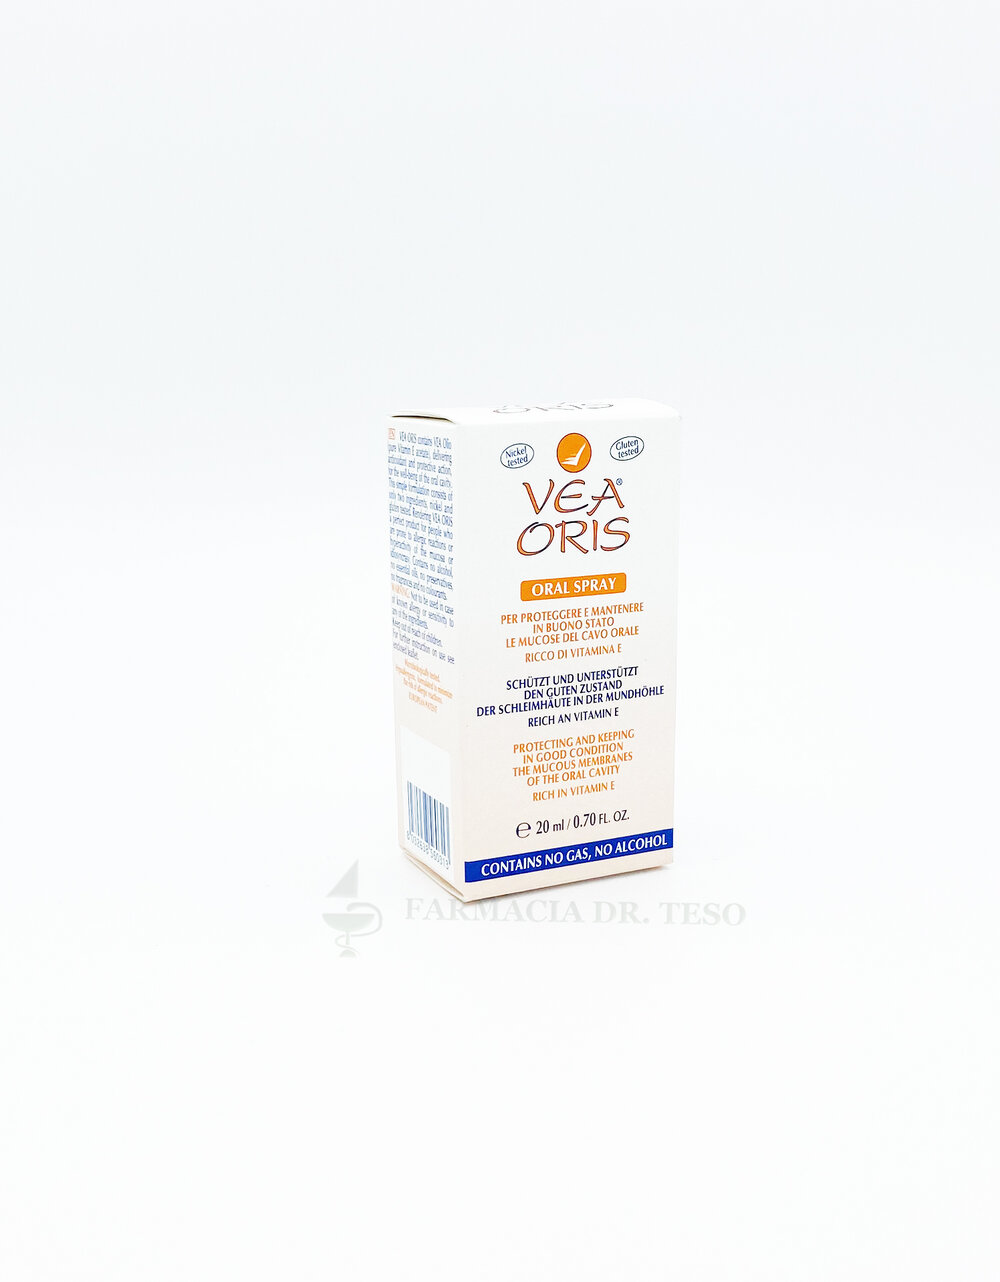 VEA ORIS SPRAY 20 ML - Farmacia Fornari Dott. Yari